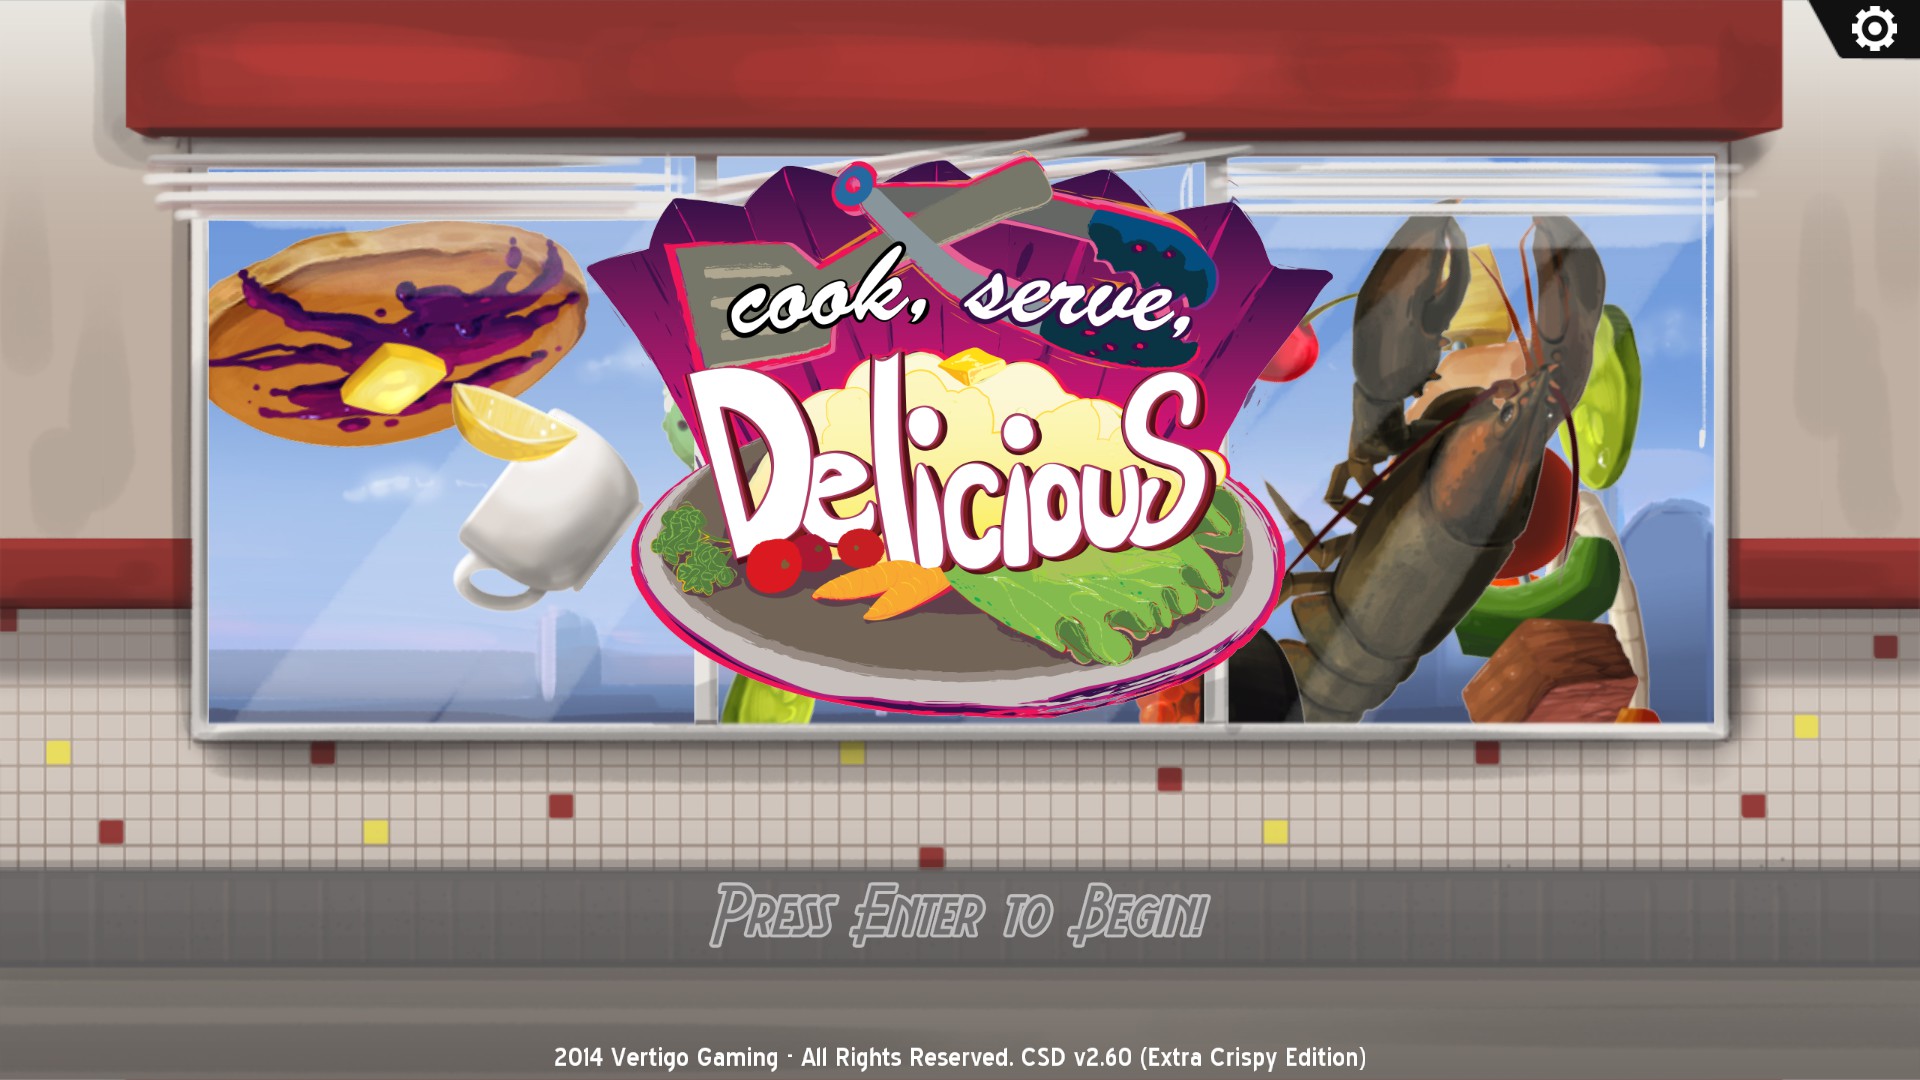 Cook, Serve, Delicious! HD wallpapers, Desktop wallpaper - most viewed